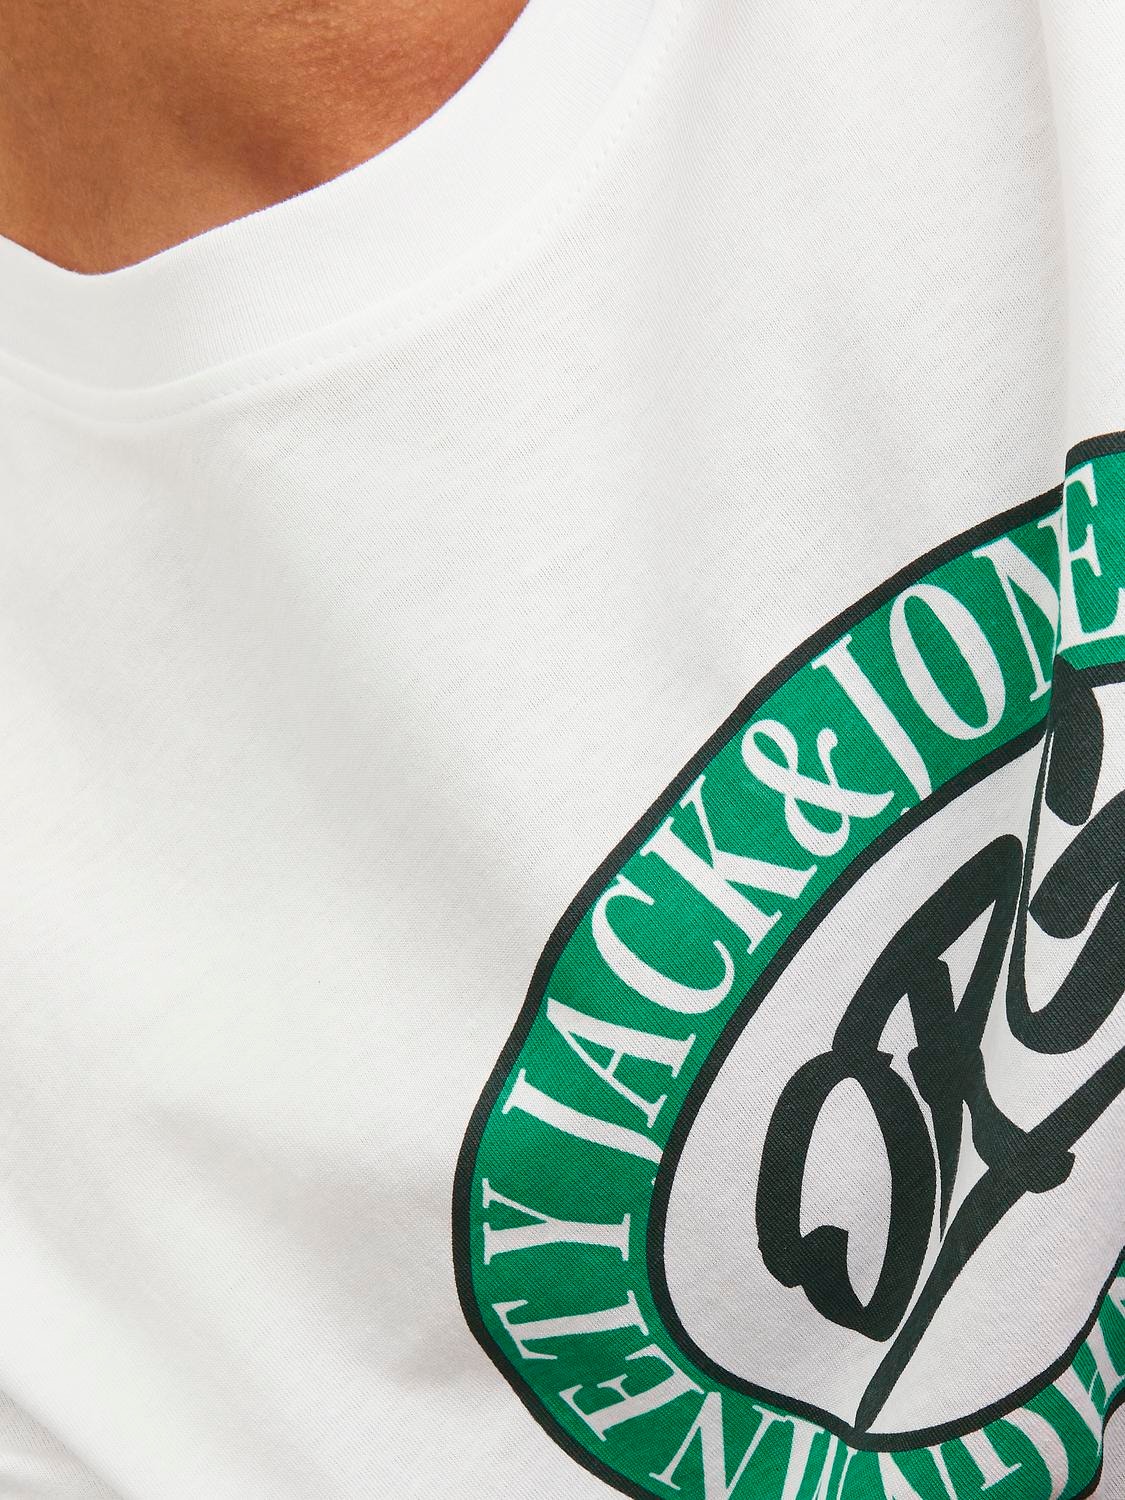 Jack & Jones Camiseta Logotipo Cuello redondo -Bright White - 12240664